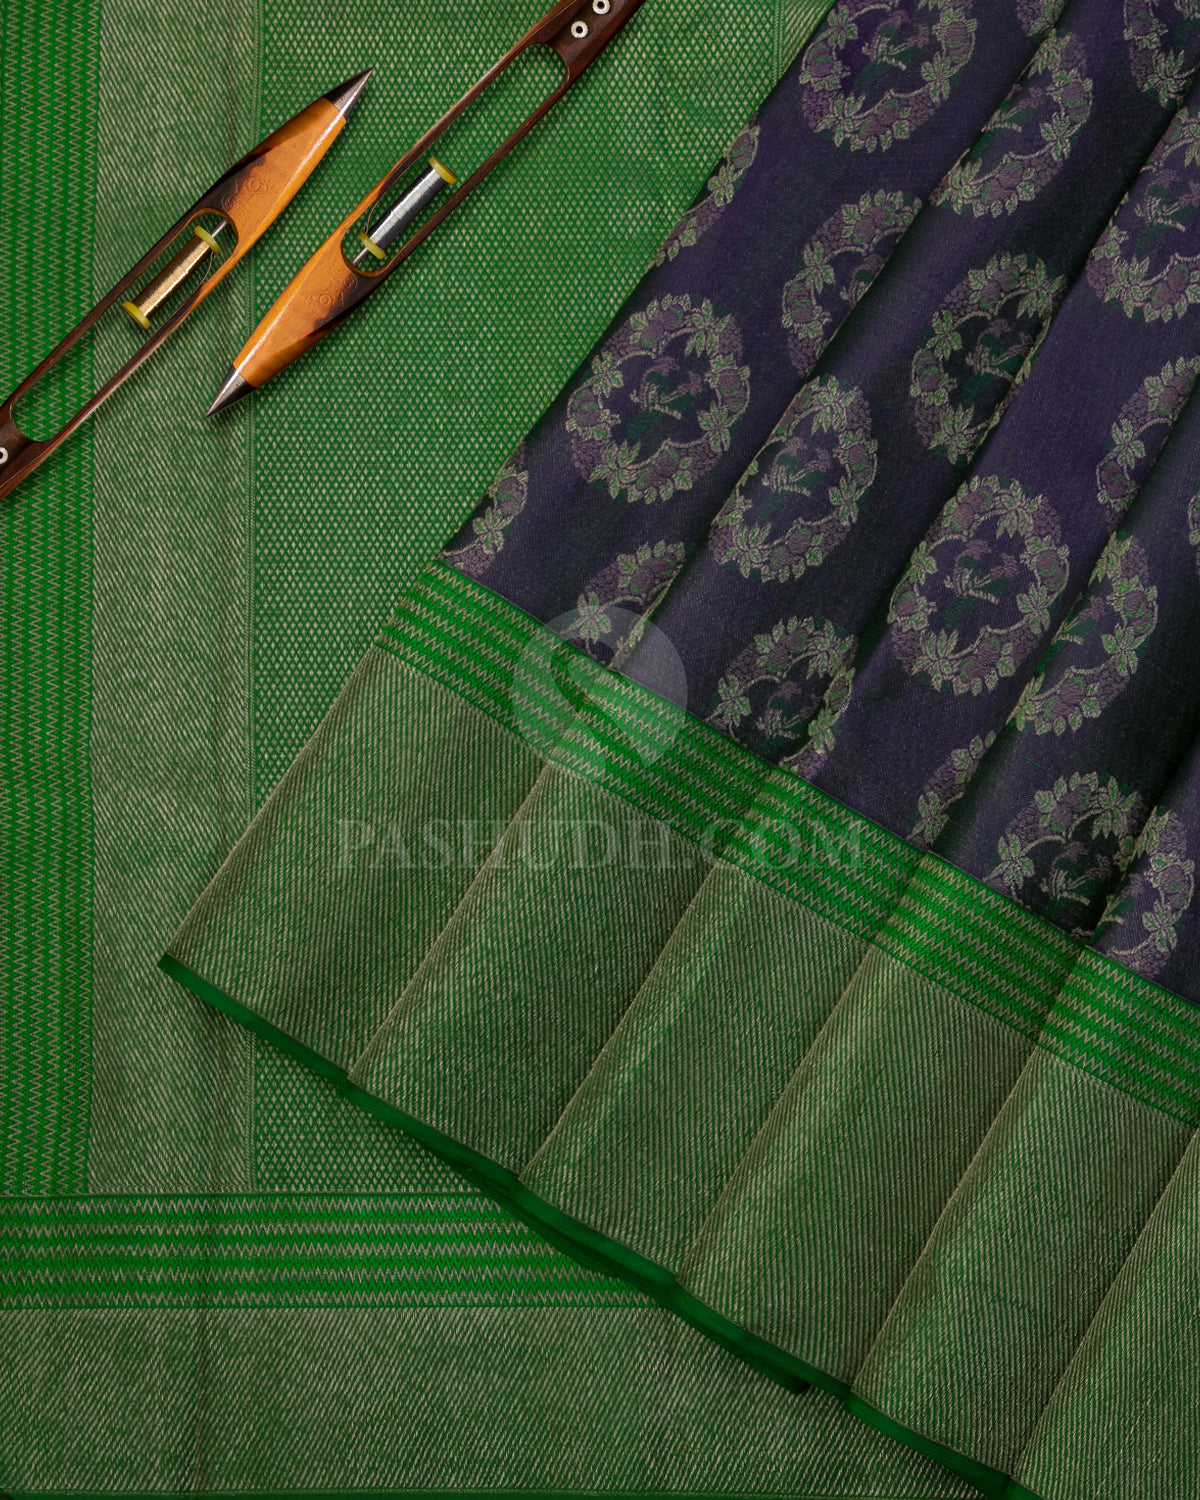 Indigo Blue and Dark Green Kanjivaram Silk Saree - D510(B) - View 1